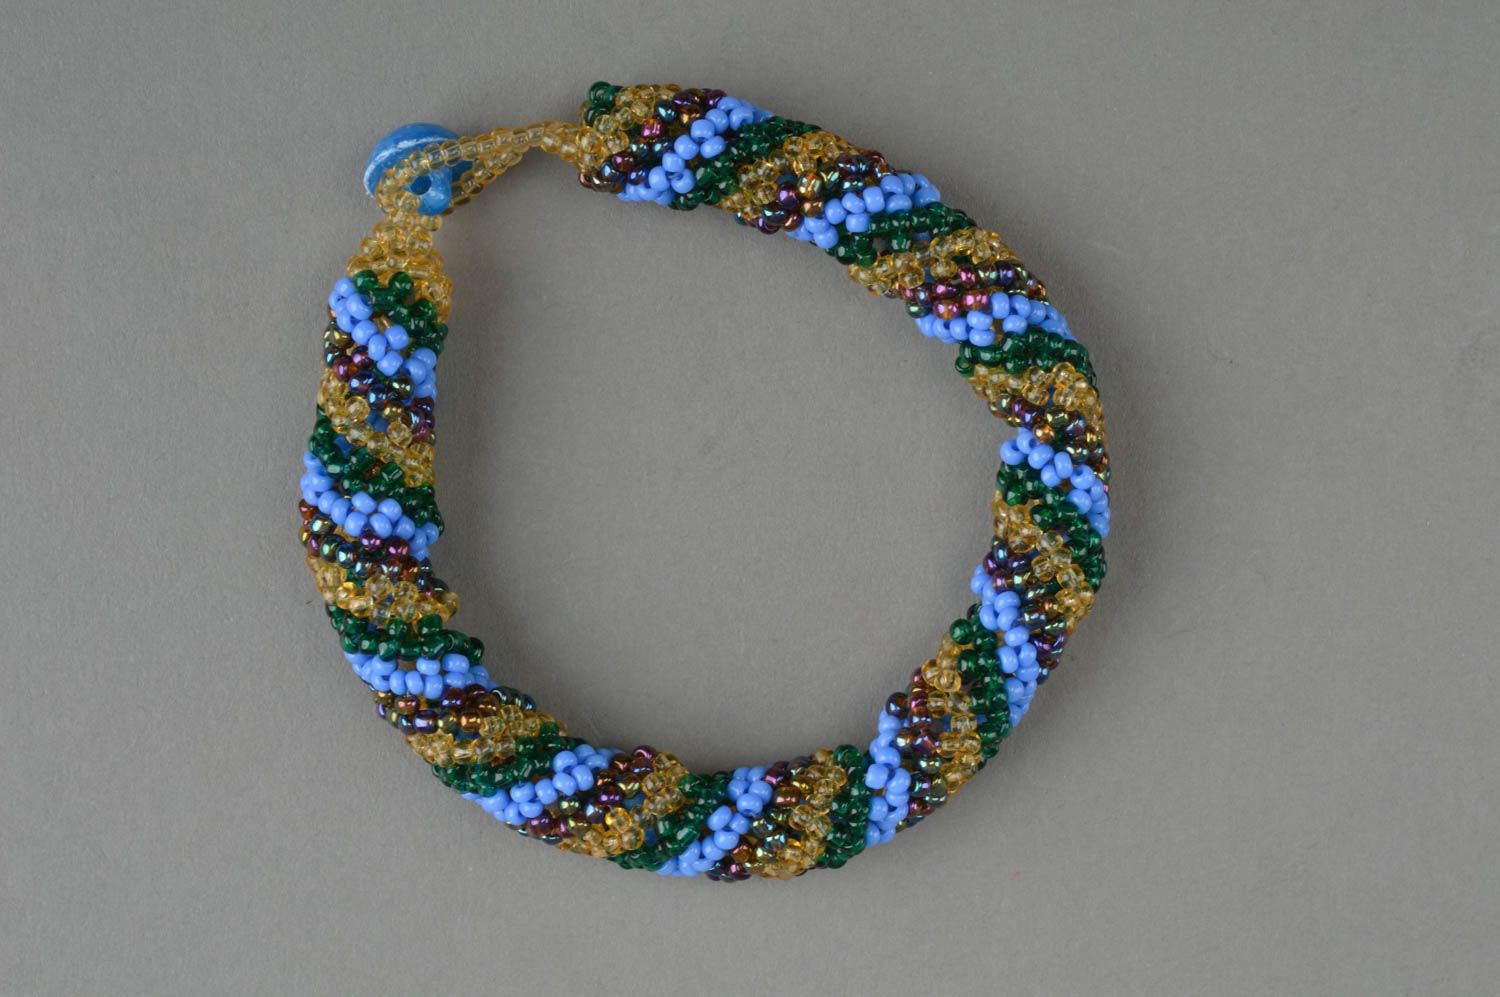 Thin colorful bracelet wrist handmade accessory unusual stylish jewelry photo 2